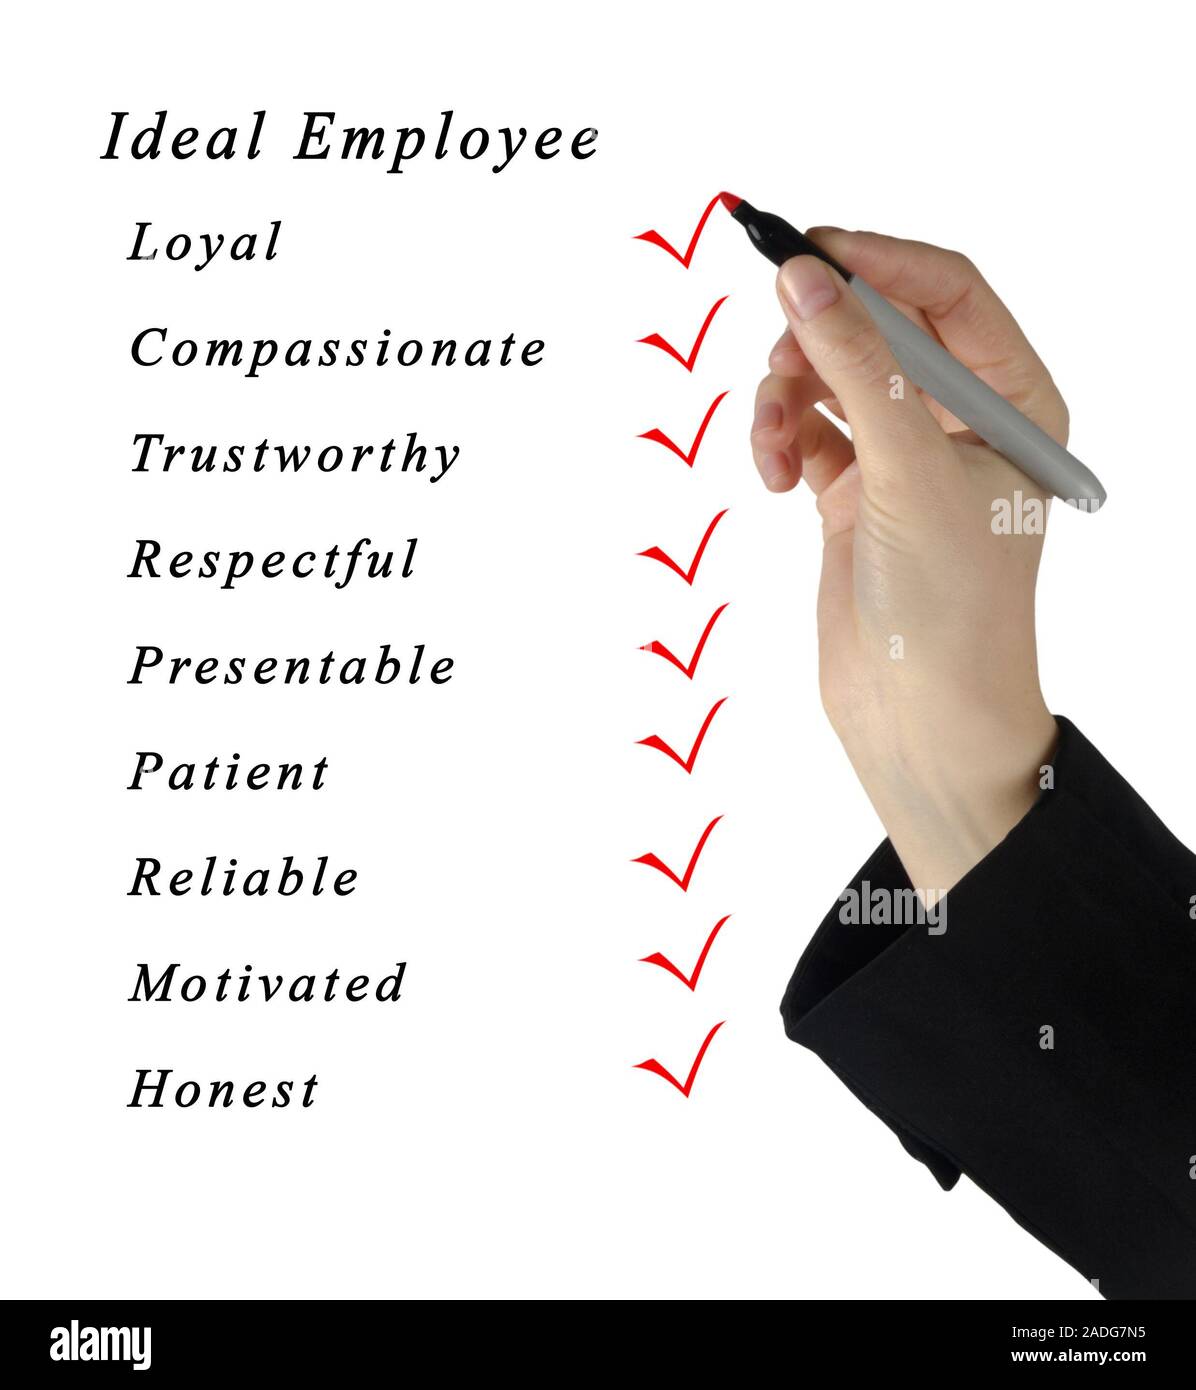 Ideal Employee Stock Photo